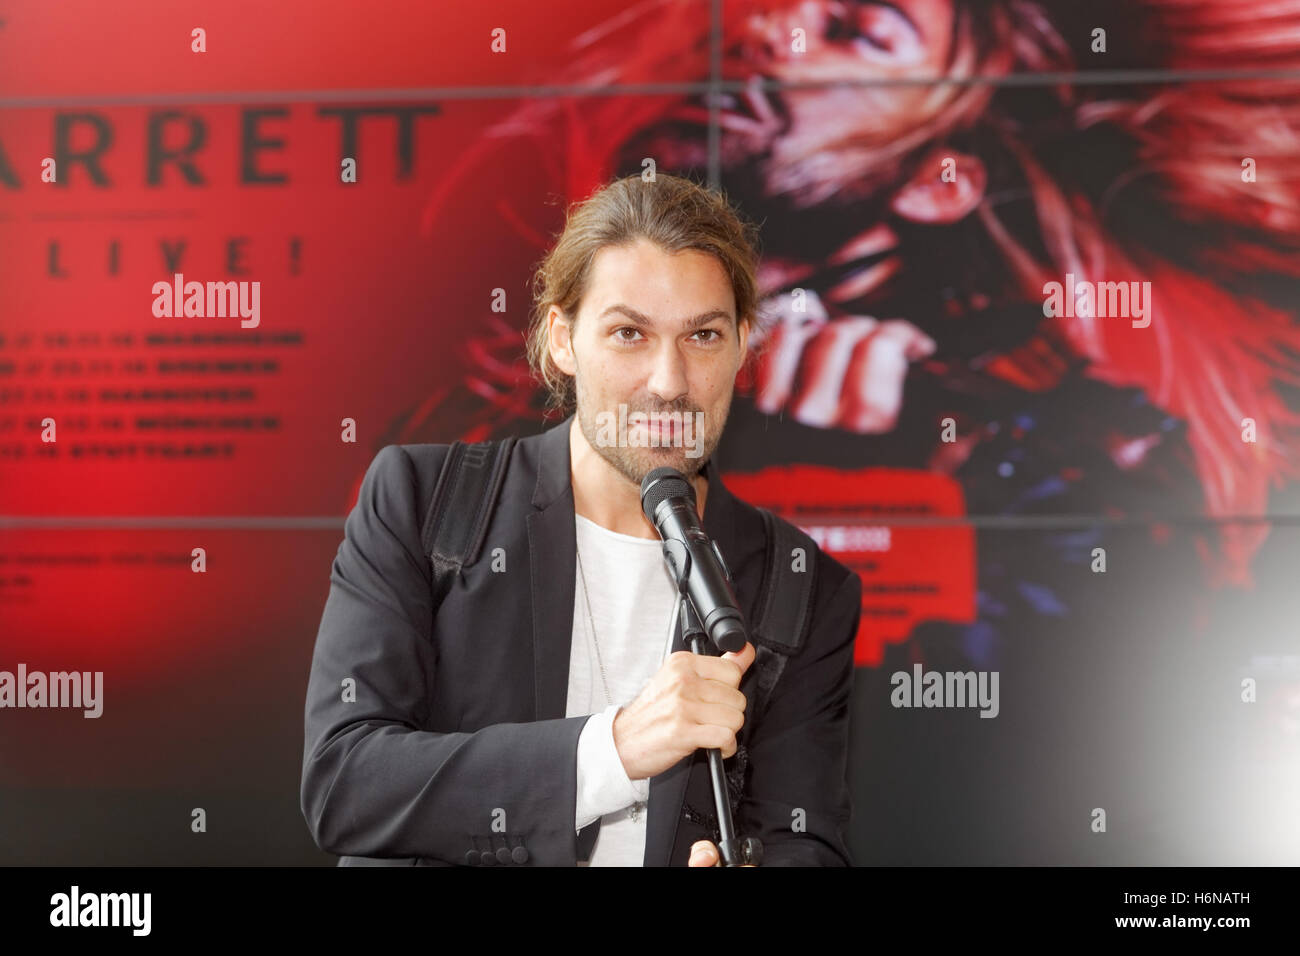 David Garrett, performing at Hubert Burda Media, Explosive Life! Tour promotion, Germany, 2016 Stock Photo